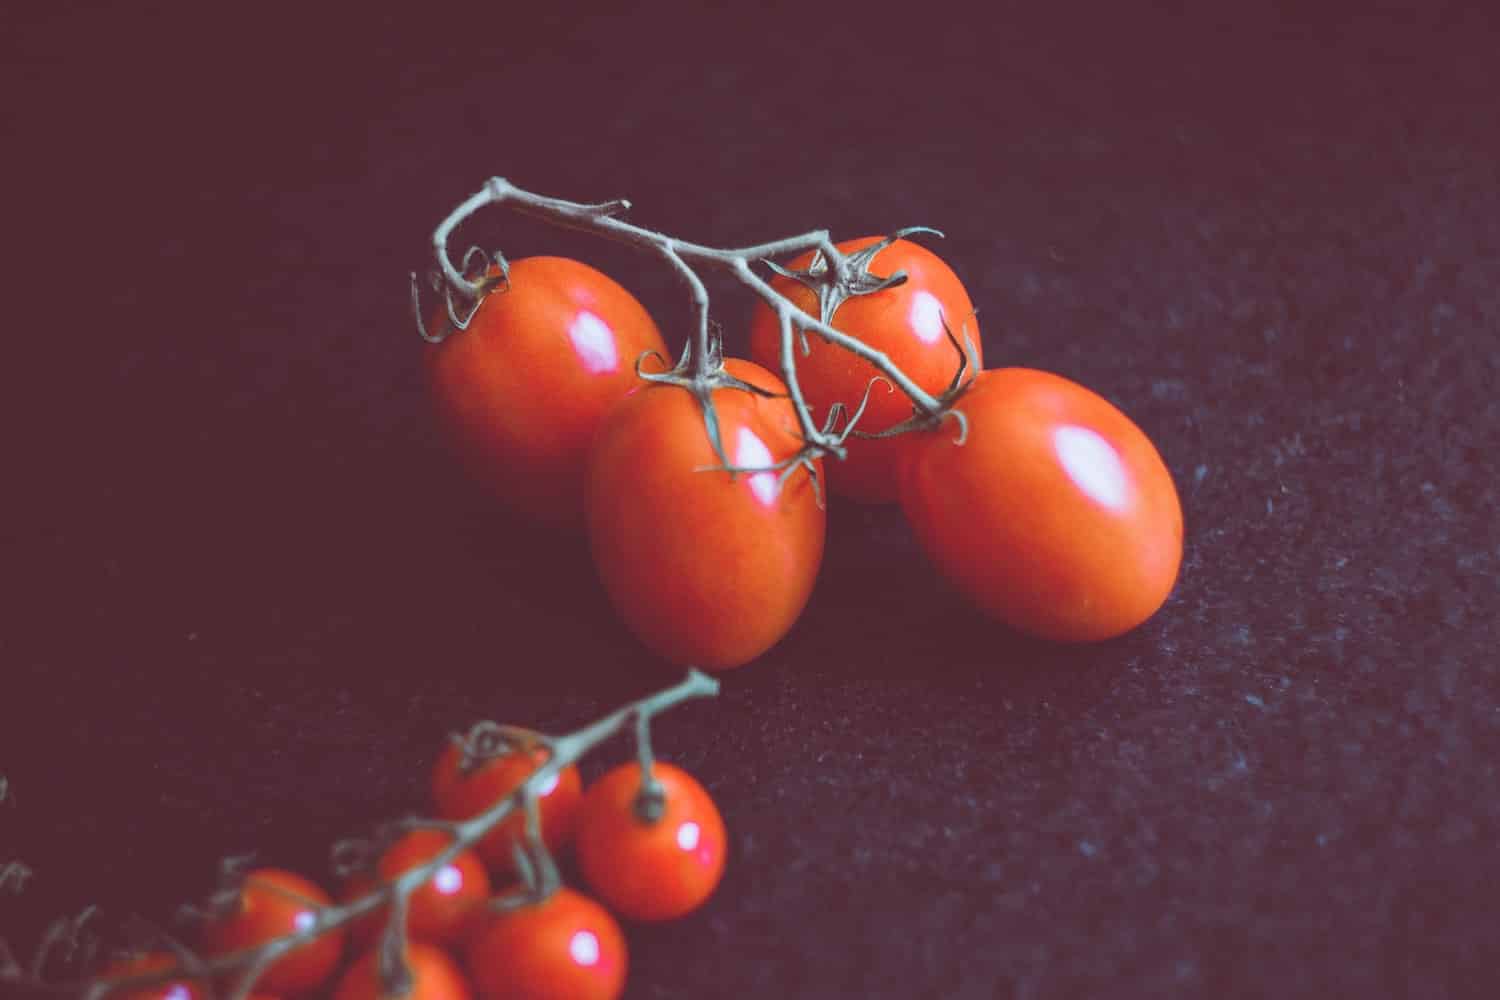 Plum Tomatoes